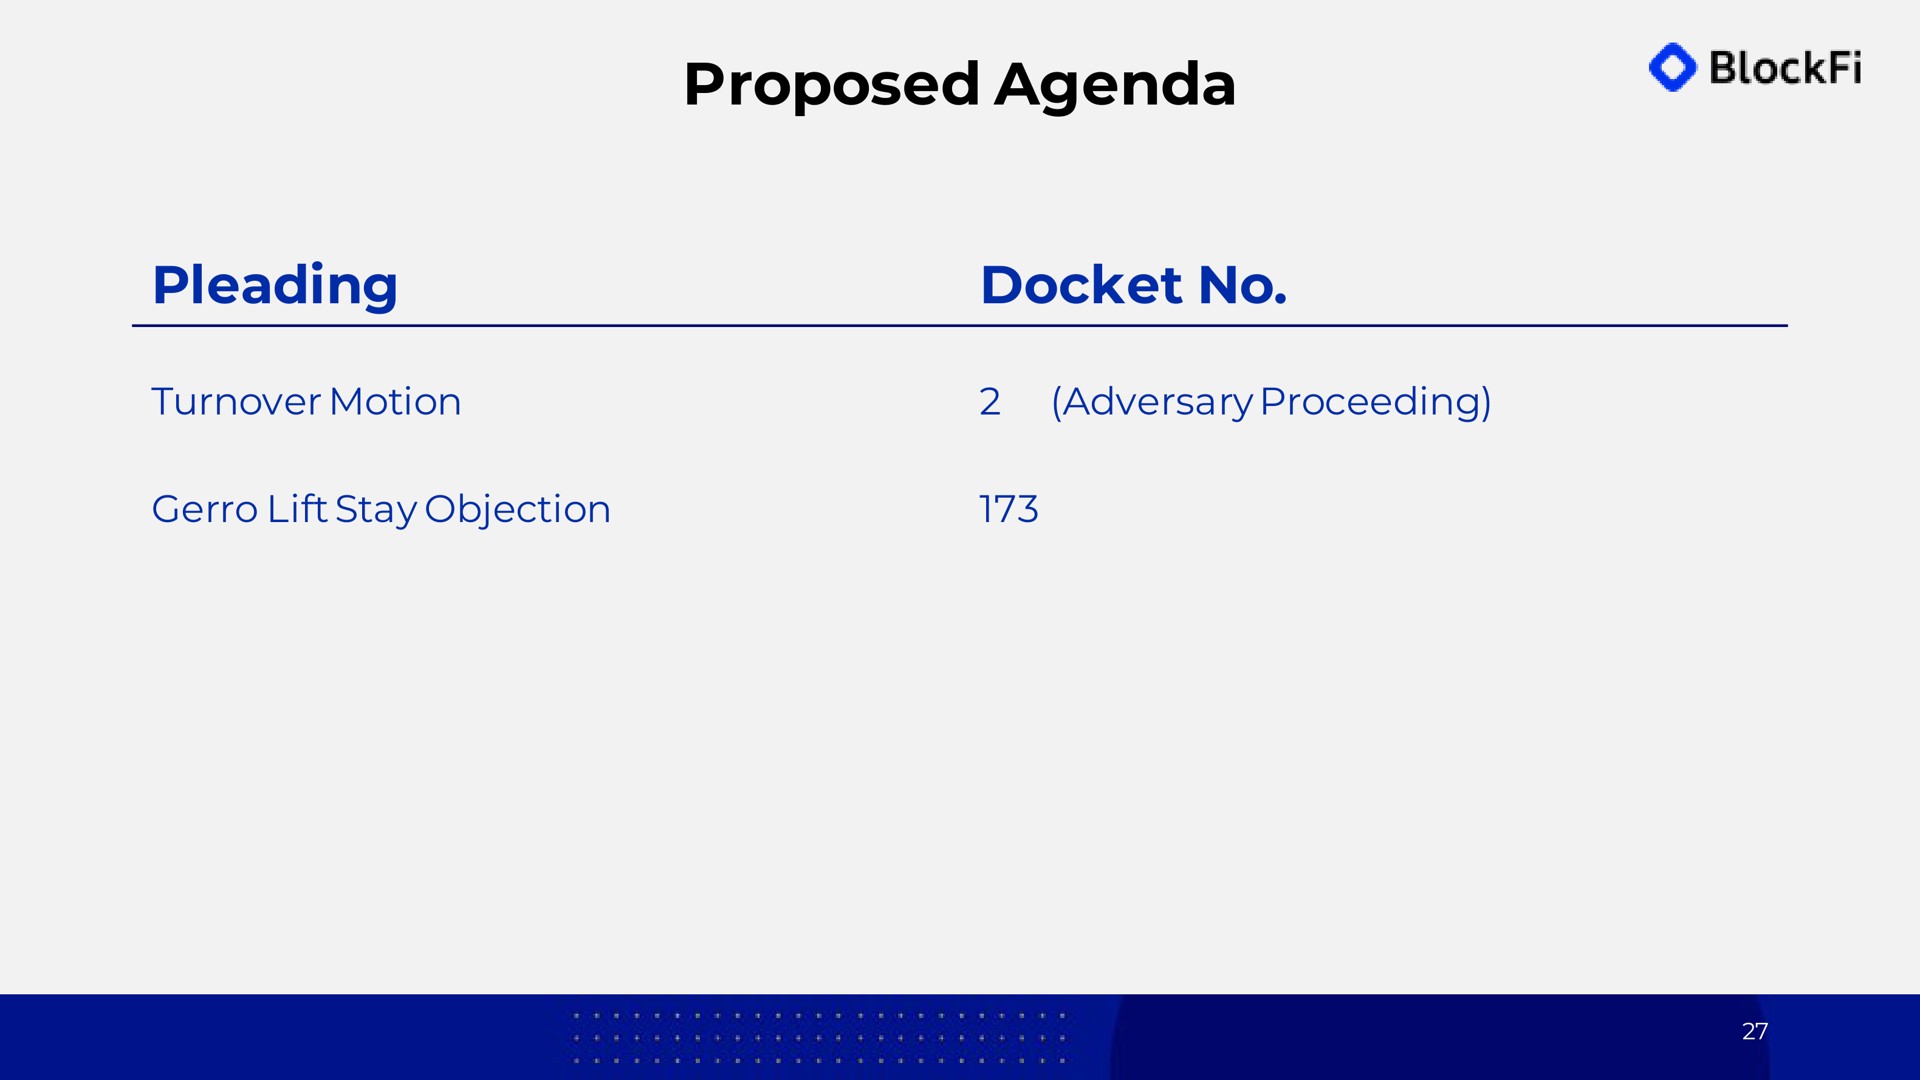 proposed agenda pleading docket no turnover motion adversary proceeding lift stay objection | BlockFi